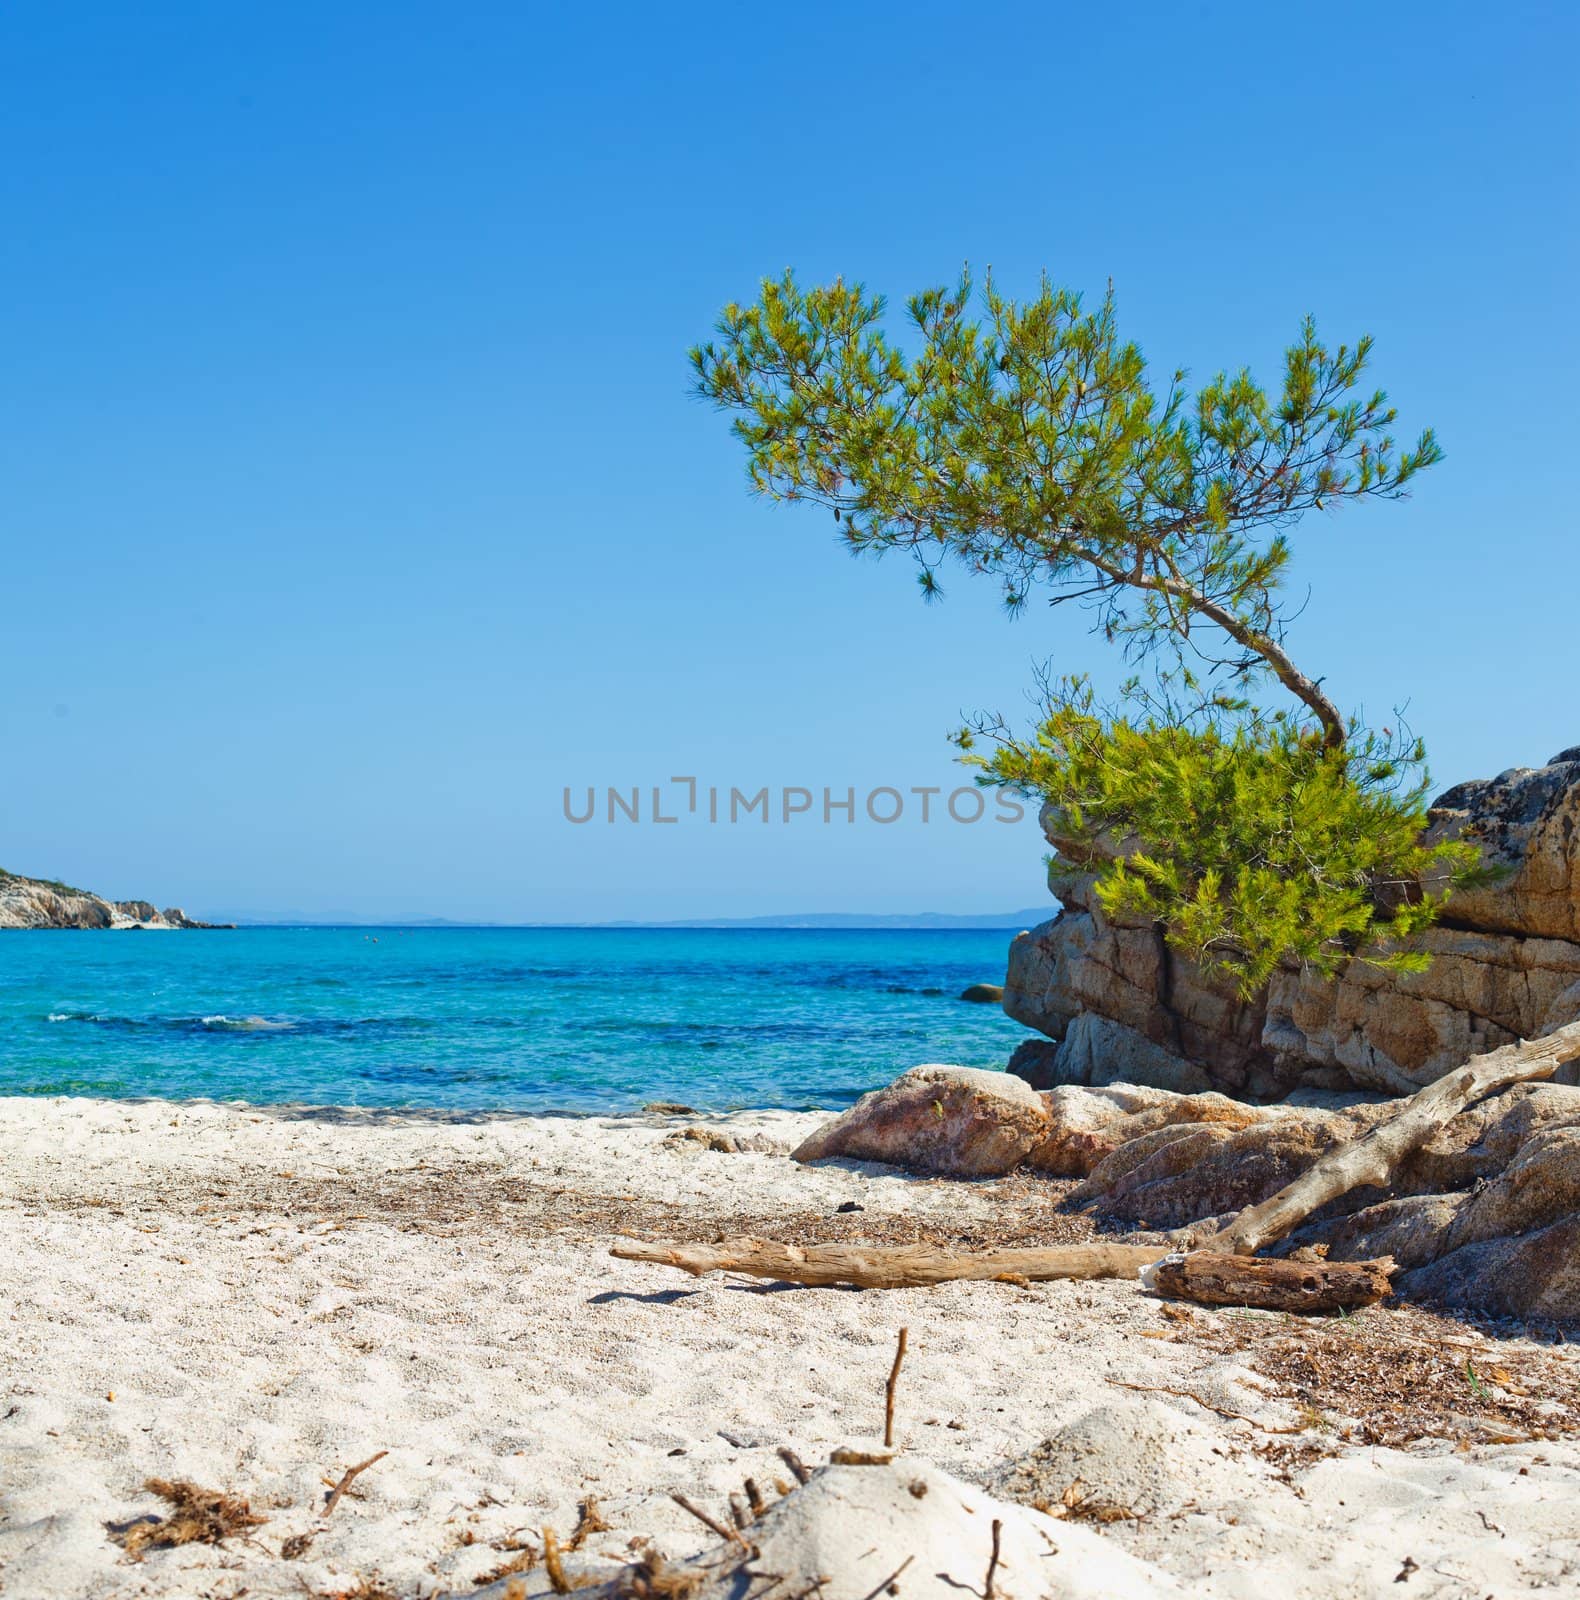 Beautiful rocky beach in Greece, wonderful nature, blue water, pine trees